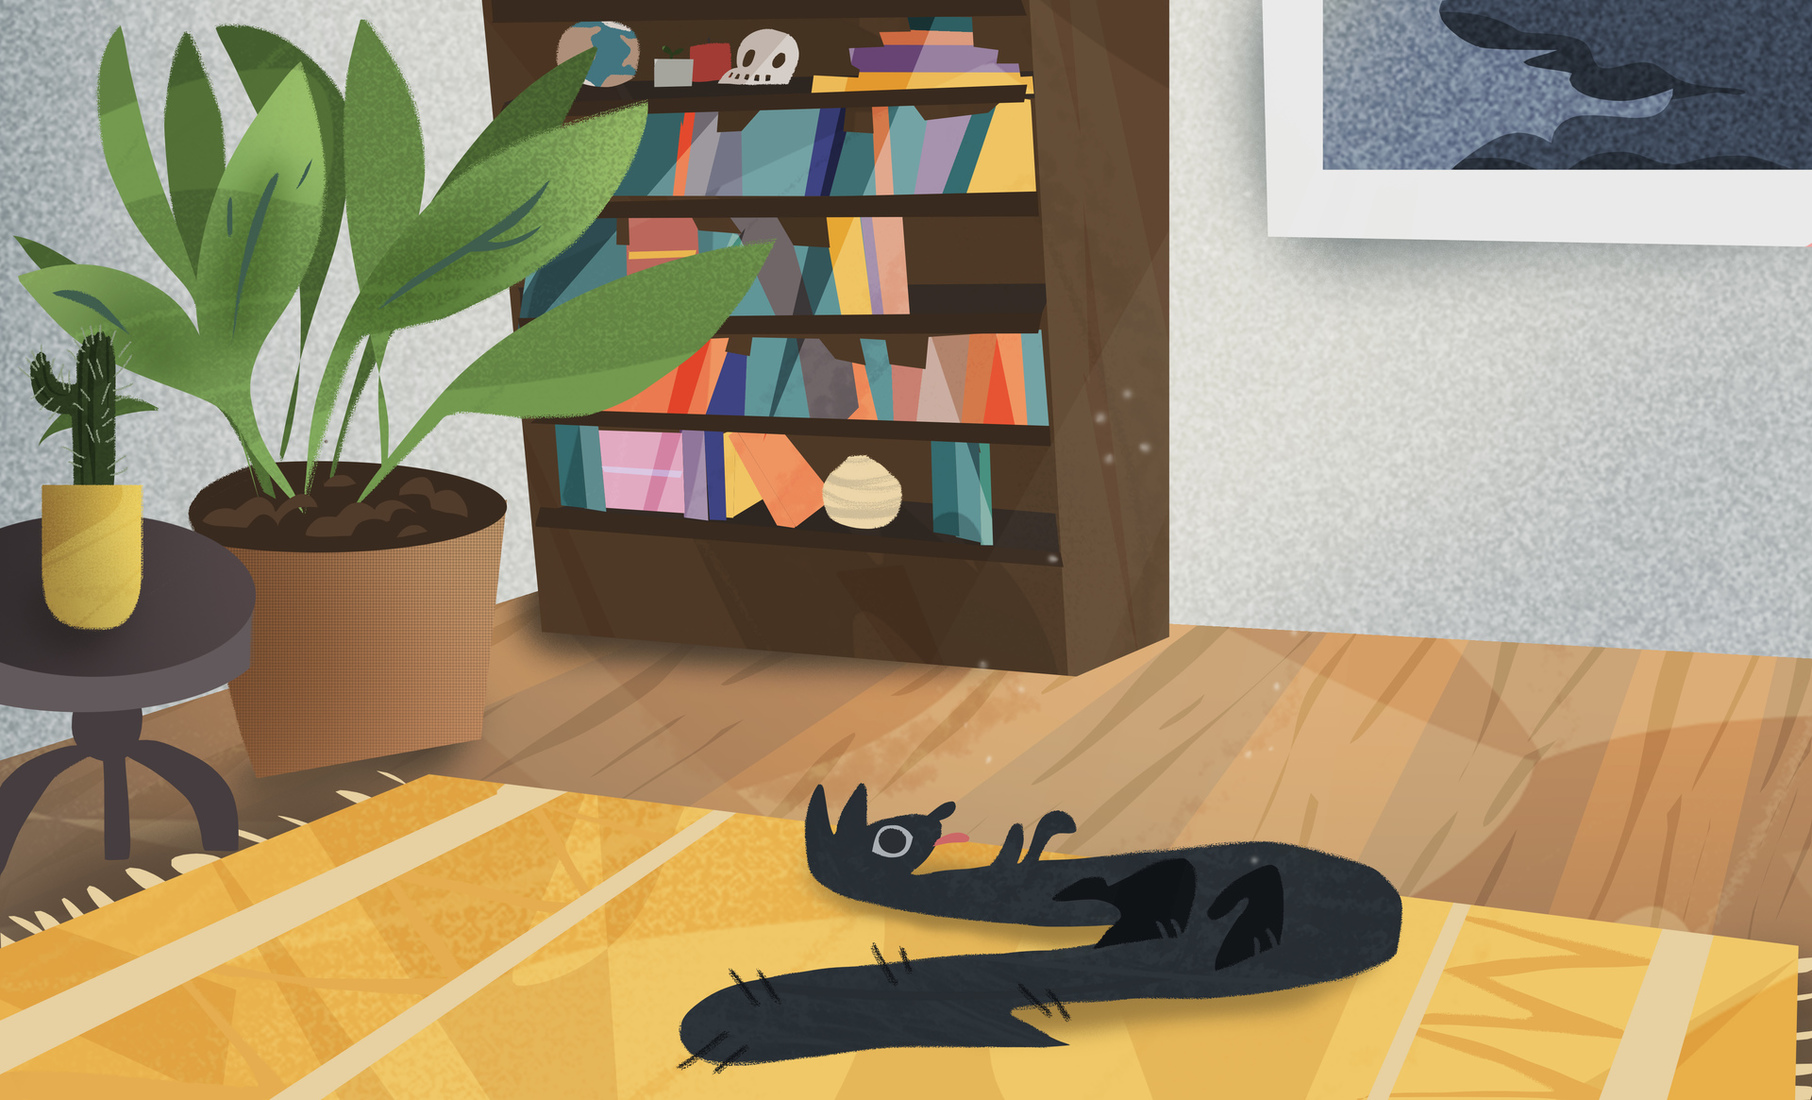 Cartoon with bookshelf and cat